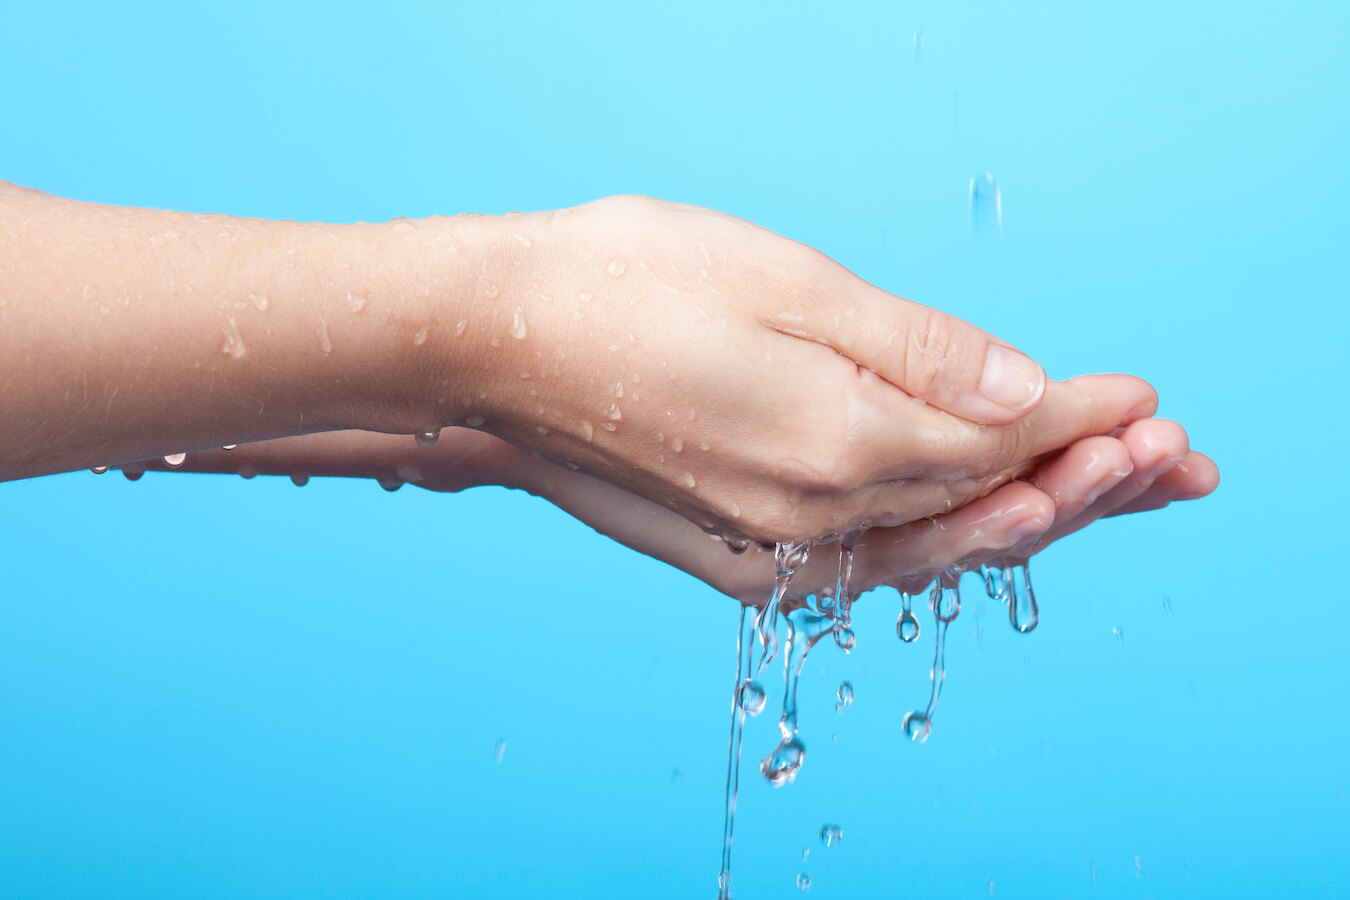 Healthcare IoT Platform to Improves Hand Hygiene Behavior